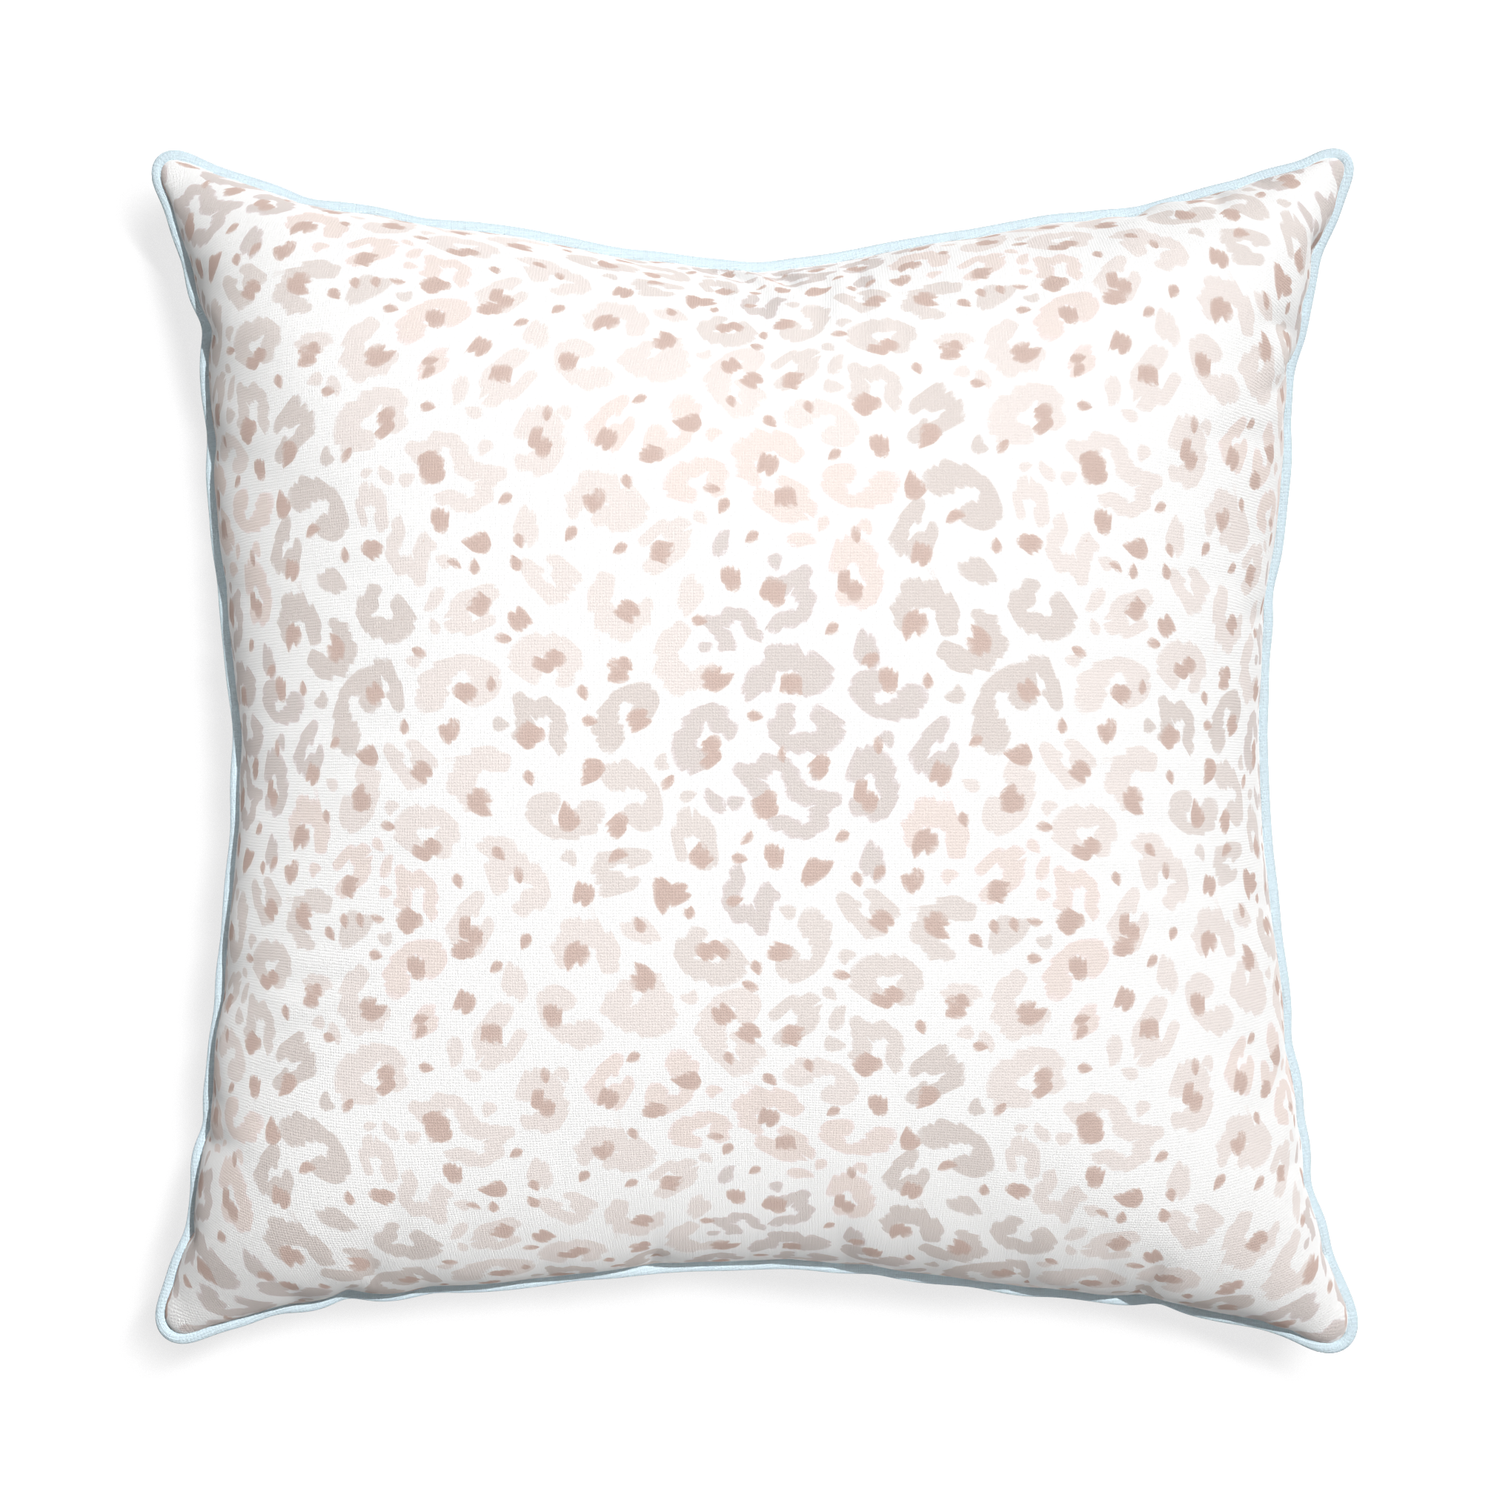 Euro-sham rosie custom pillow with powder piping on white background